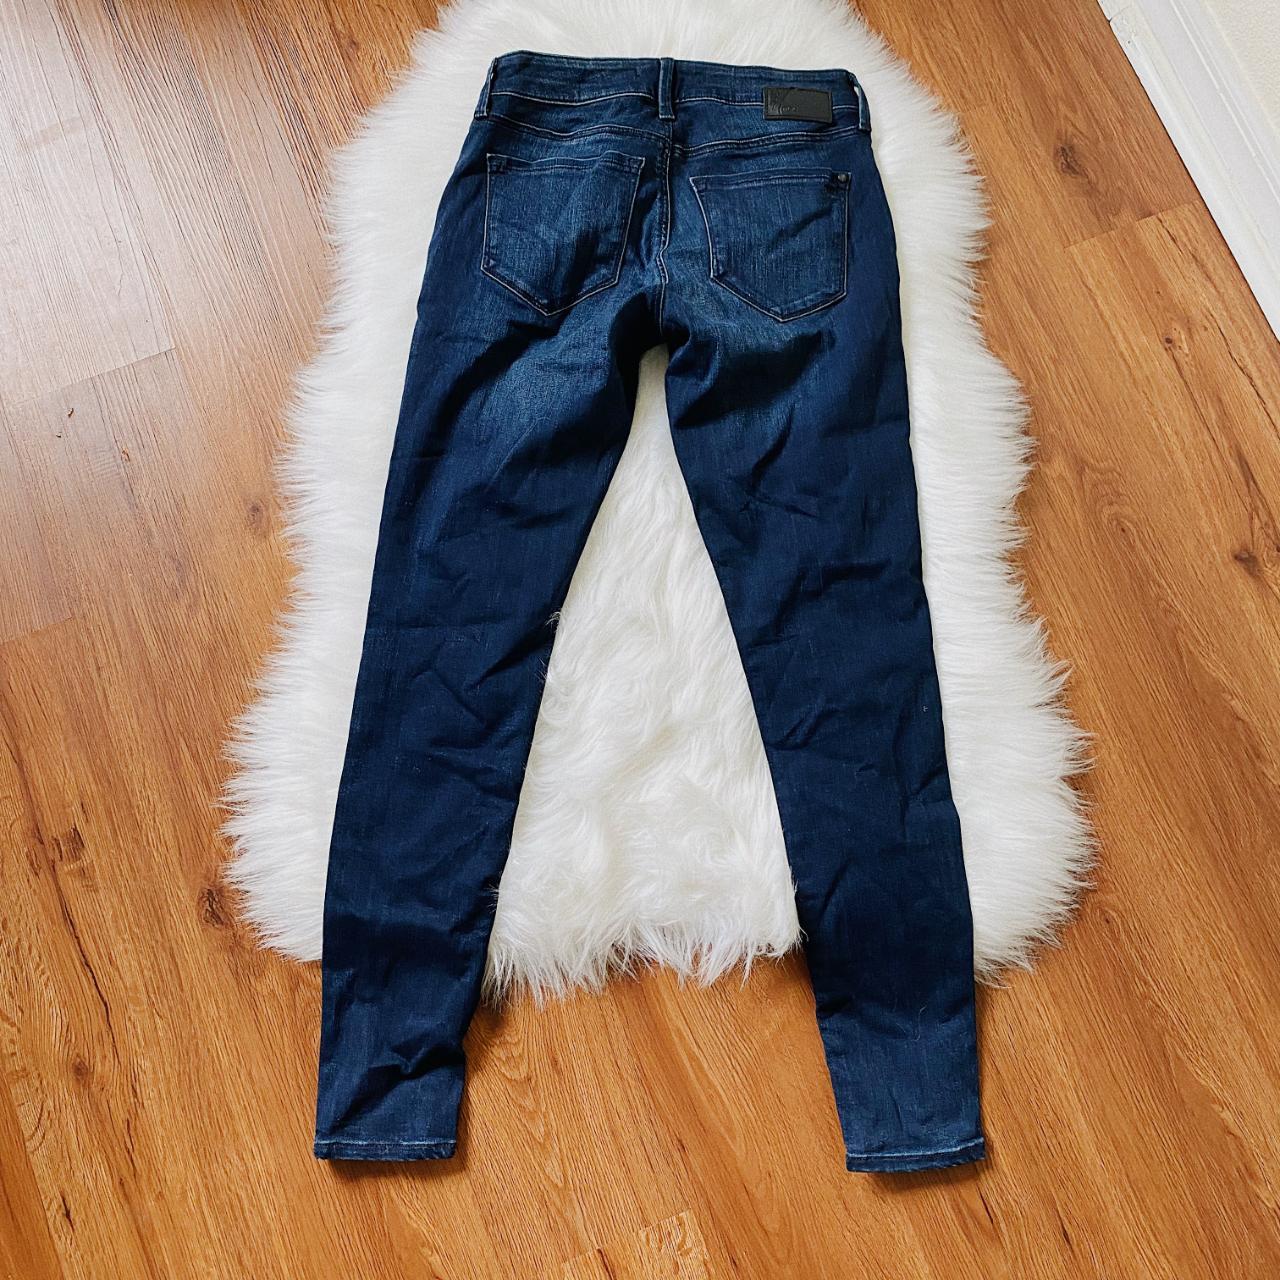 Product Image 4 - Mavi jeans co size 25